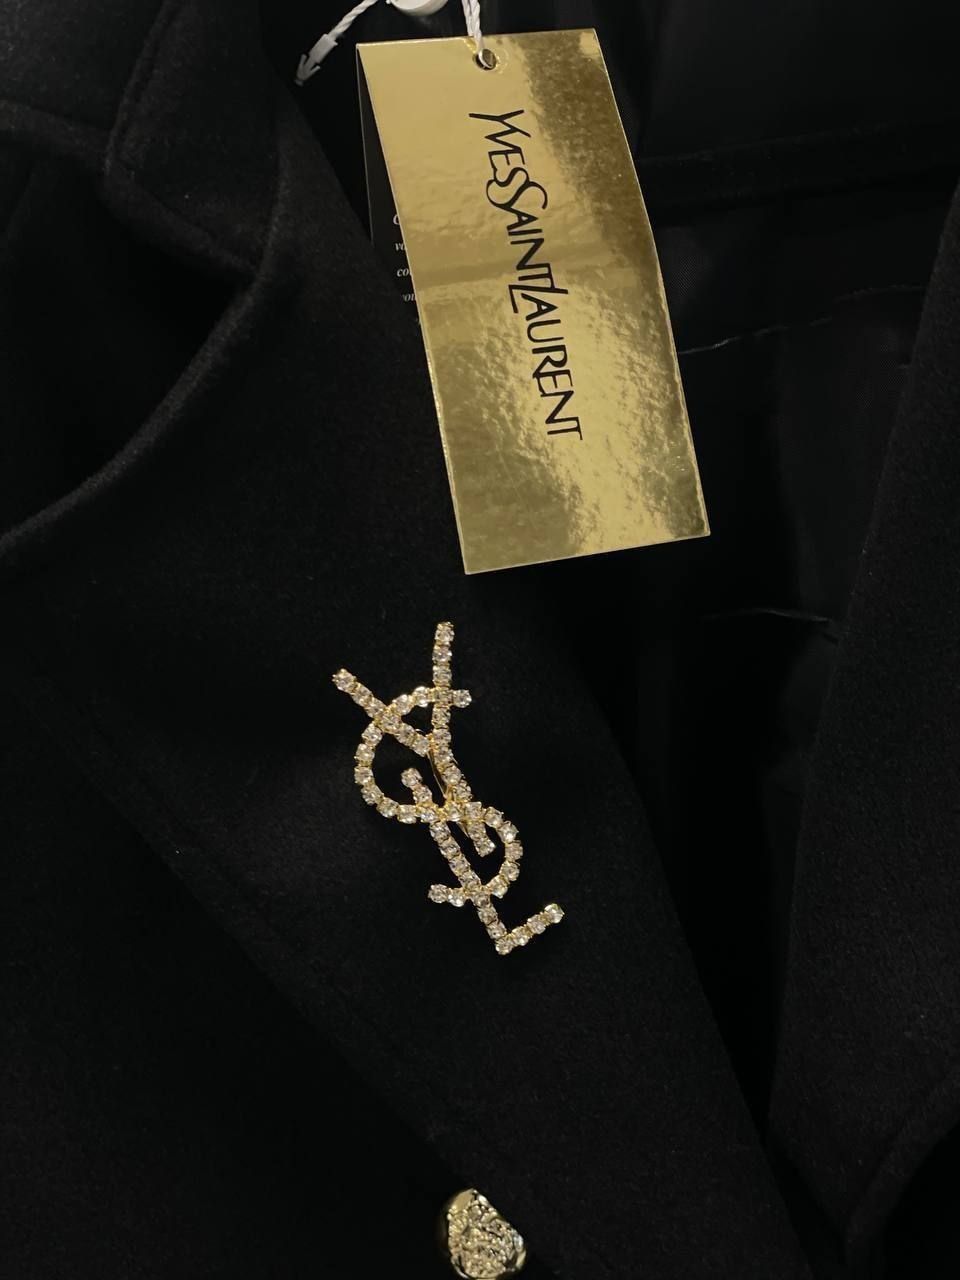 YVES SAINT LAURENT -60% Женская куртка пальто черная весенняя топовый